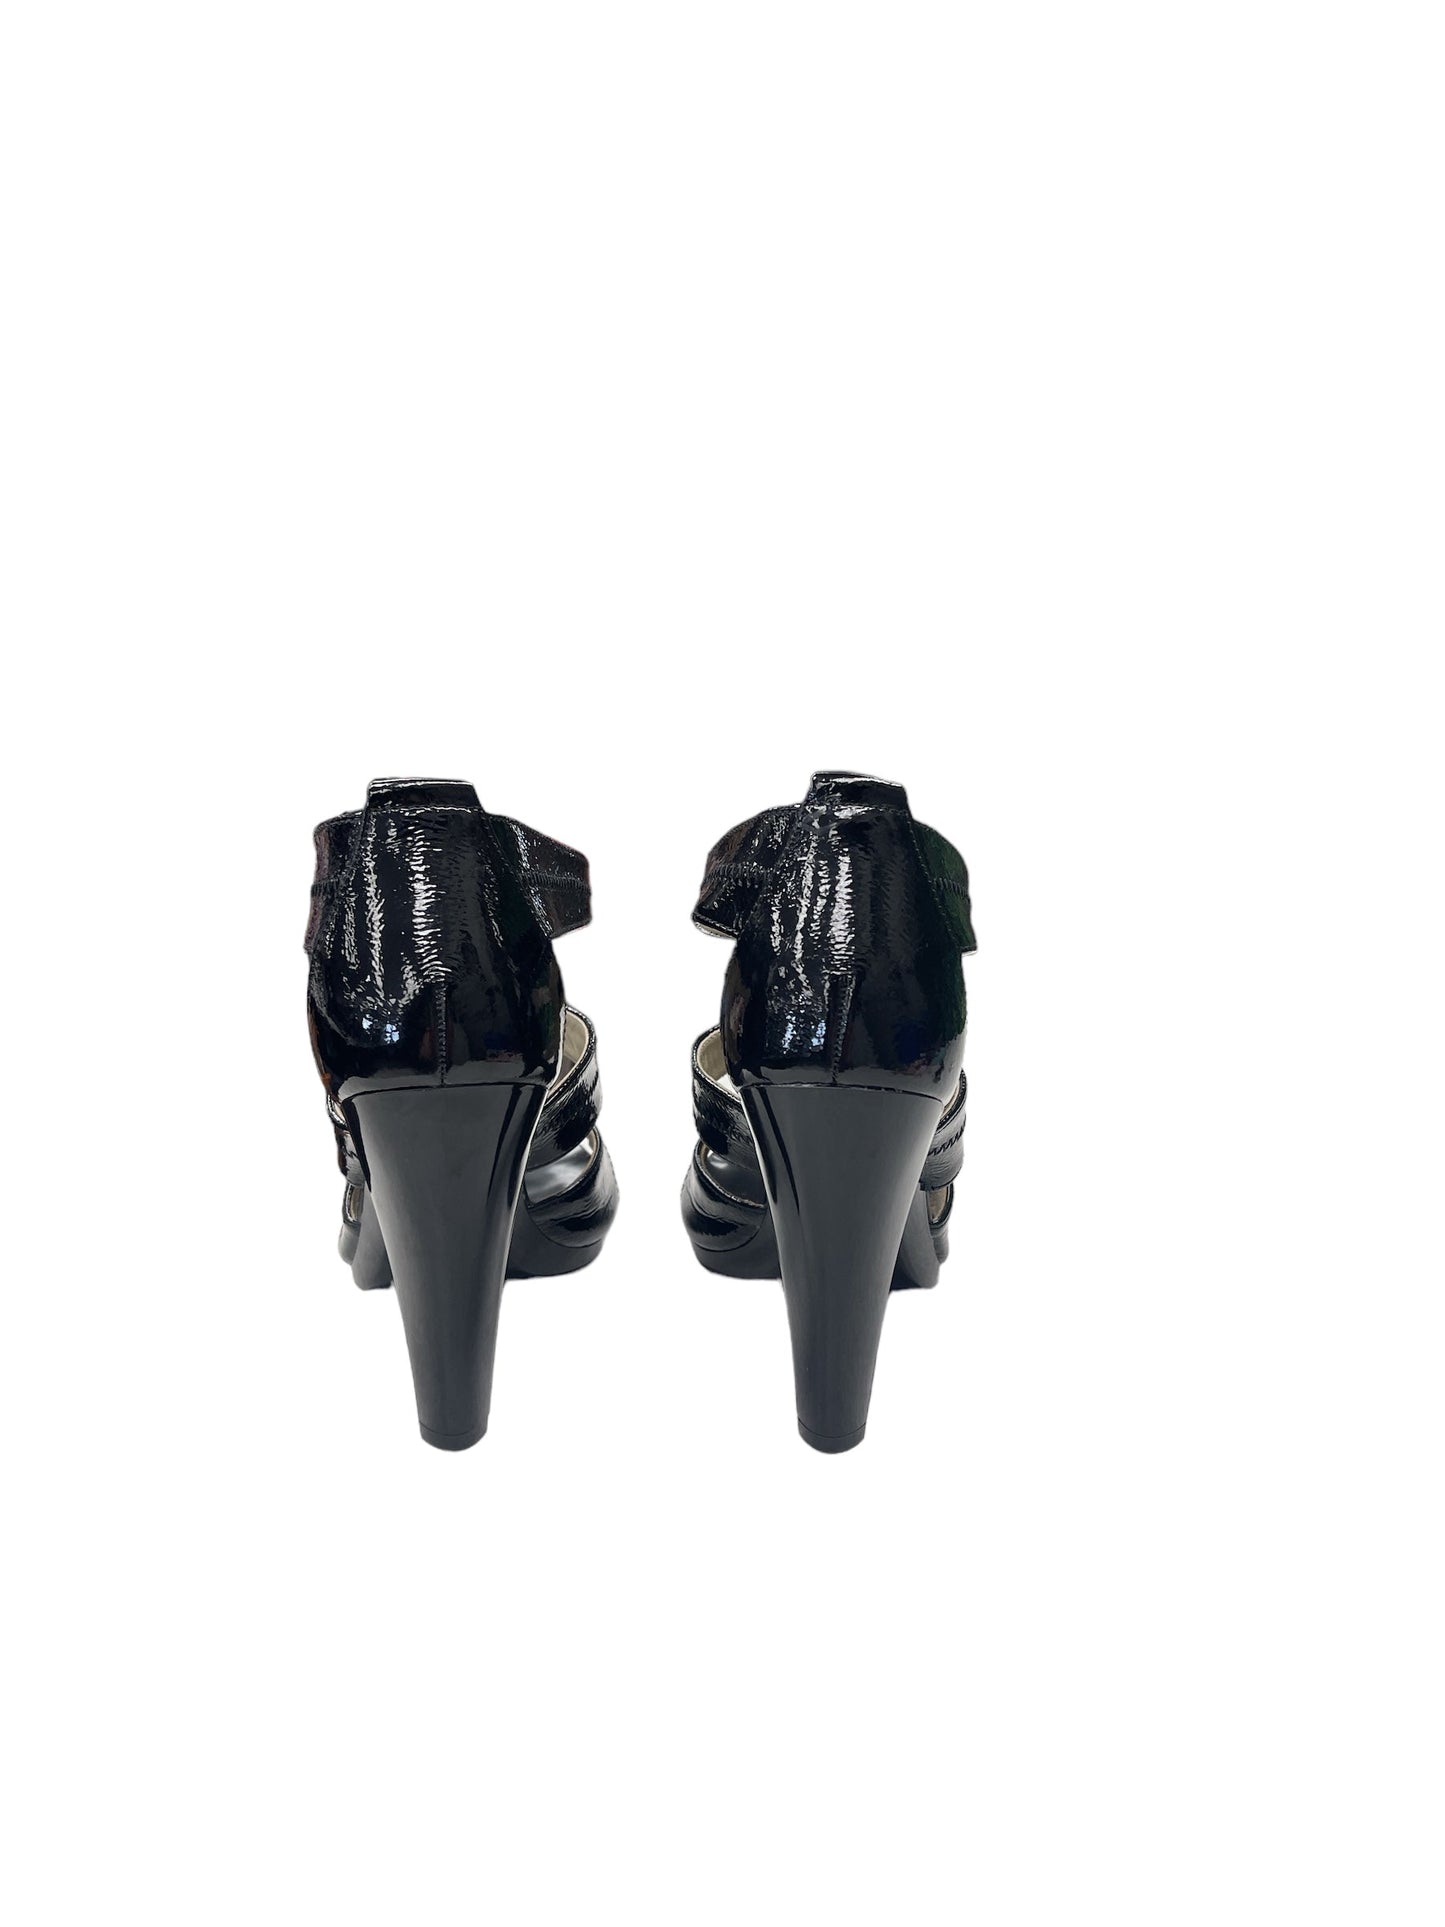 Black Shoes Heels Stiletto Michael By Michael Kors, Size 9.5